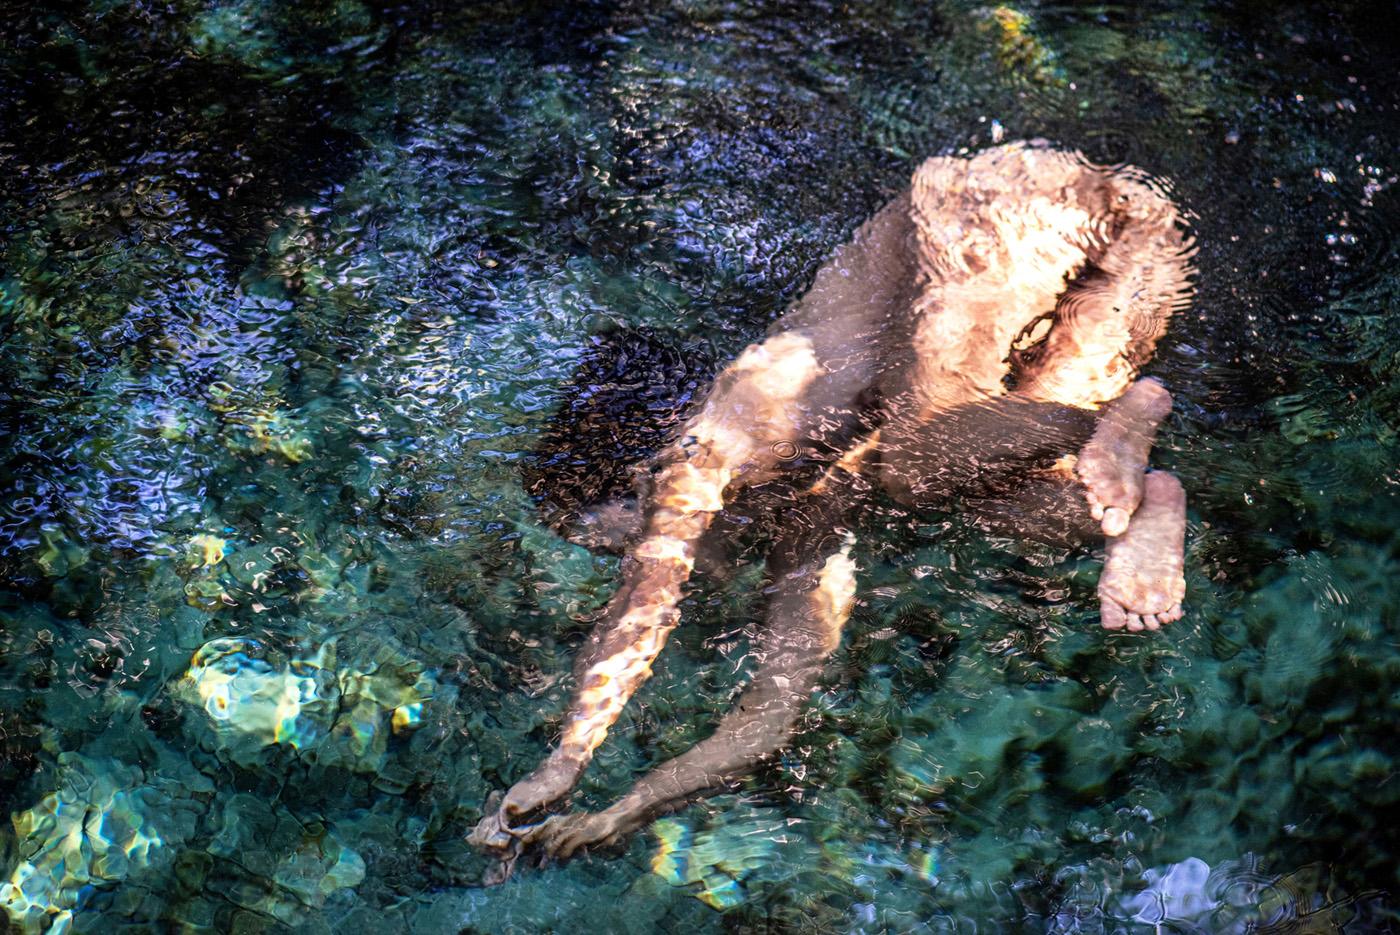 John Mazlish Nude Print - "Deep Dive"- Colorful Nude in Water Photo